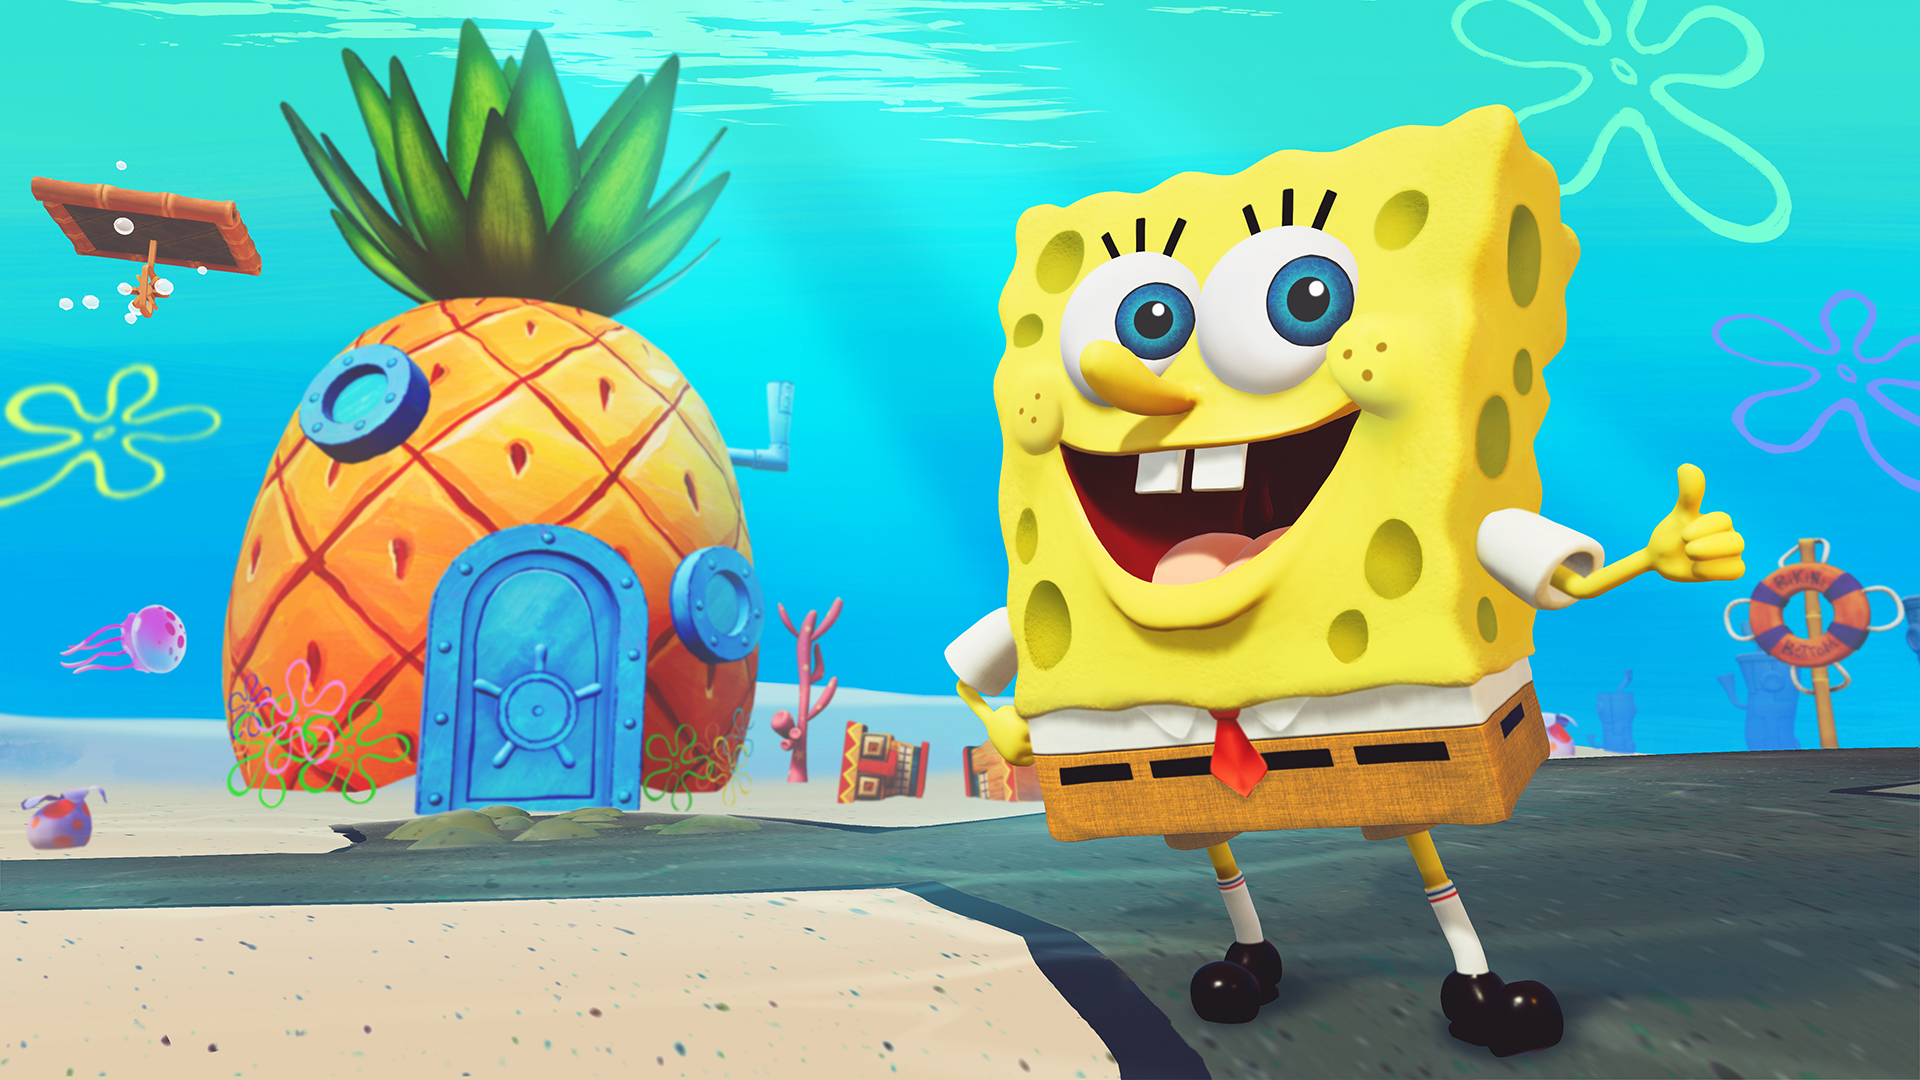 SpongeBob SquarePants: Battle for Bikini Bottom - Rehydrated Free Download